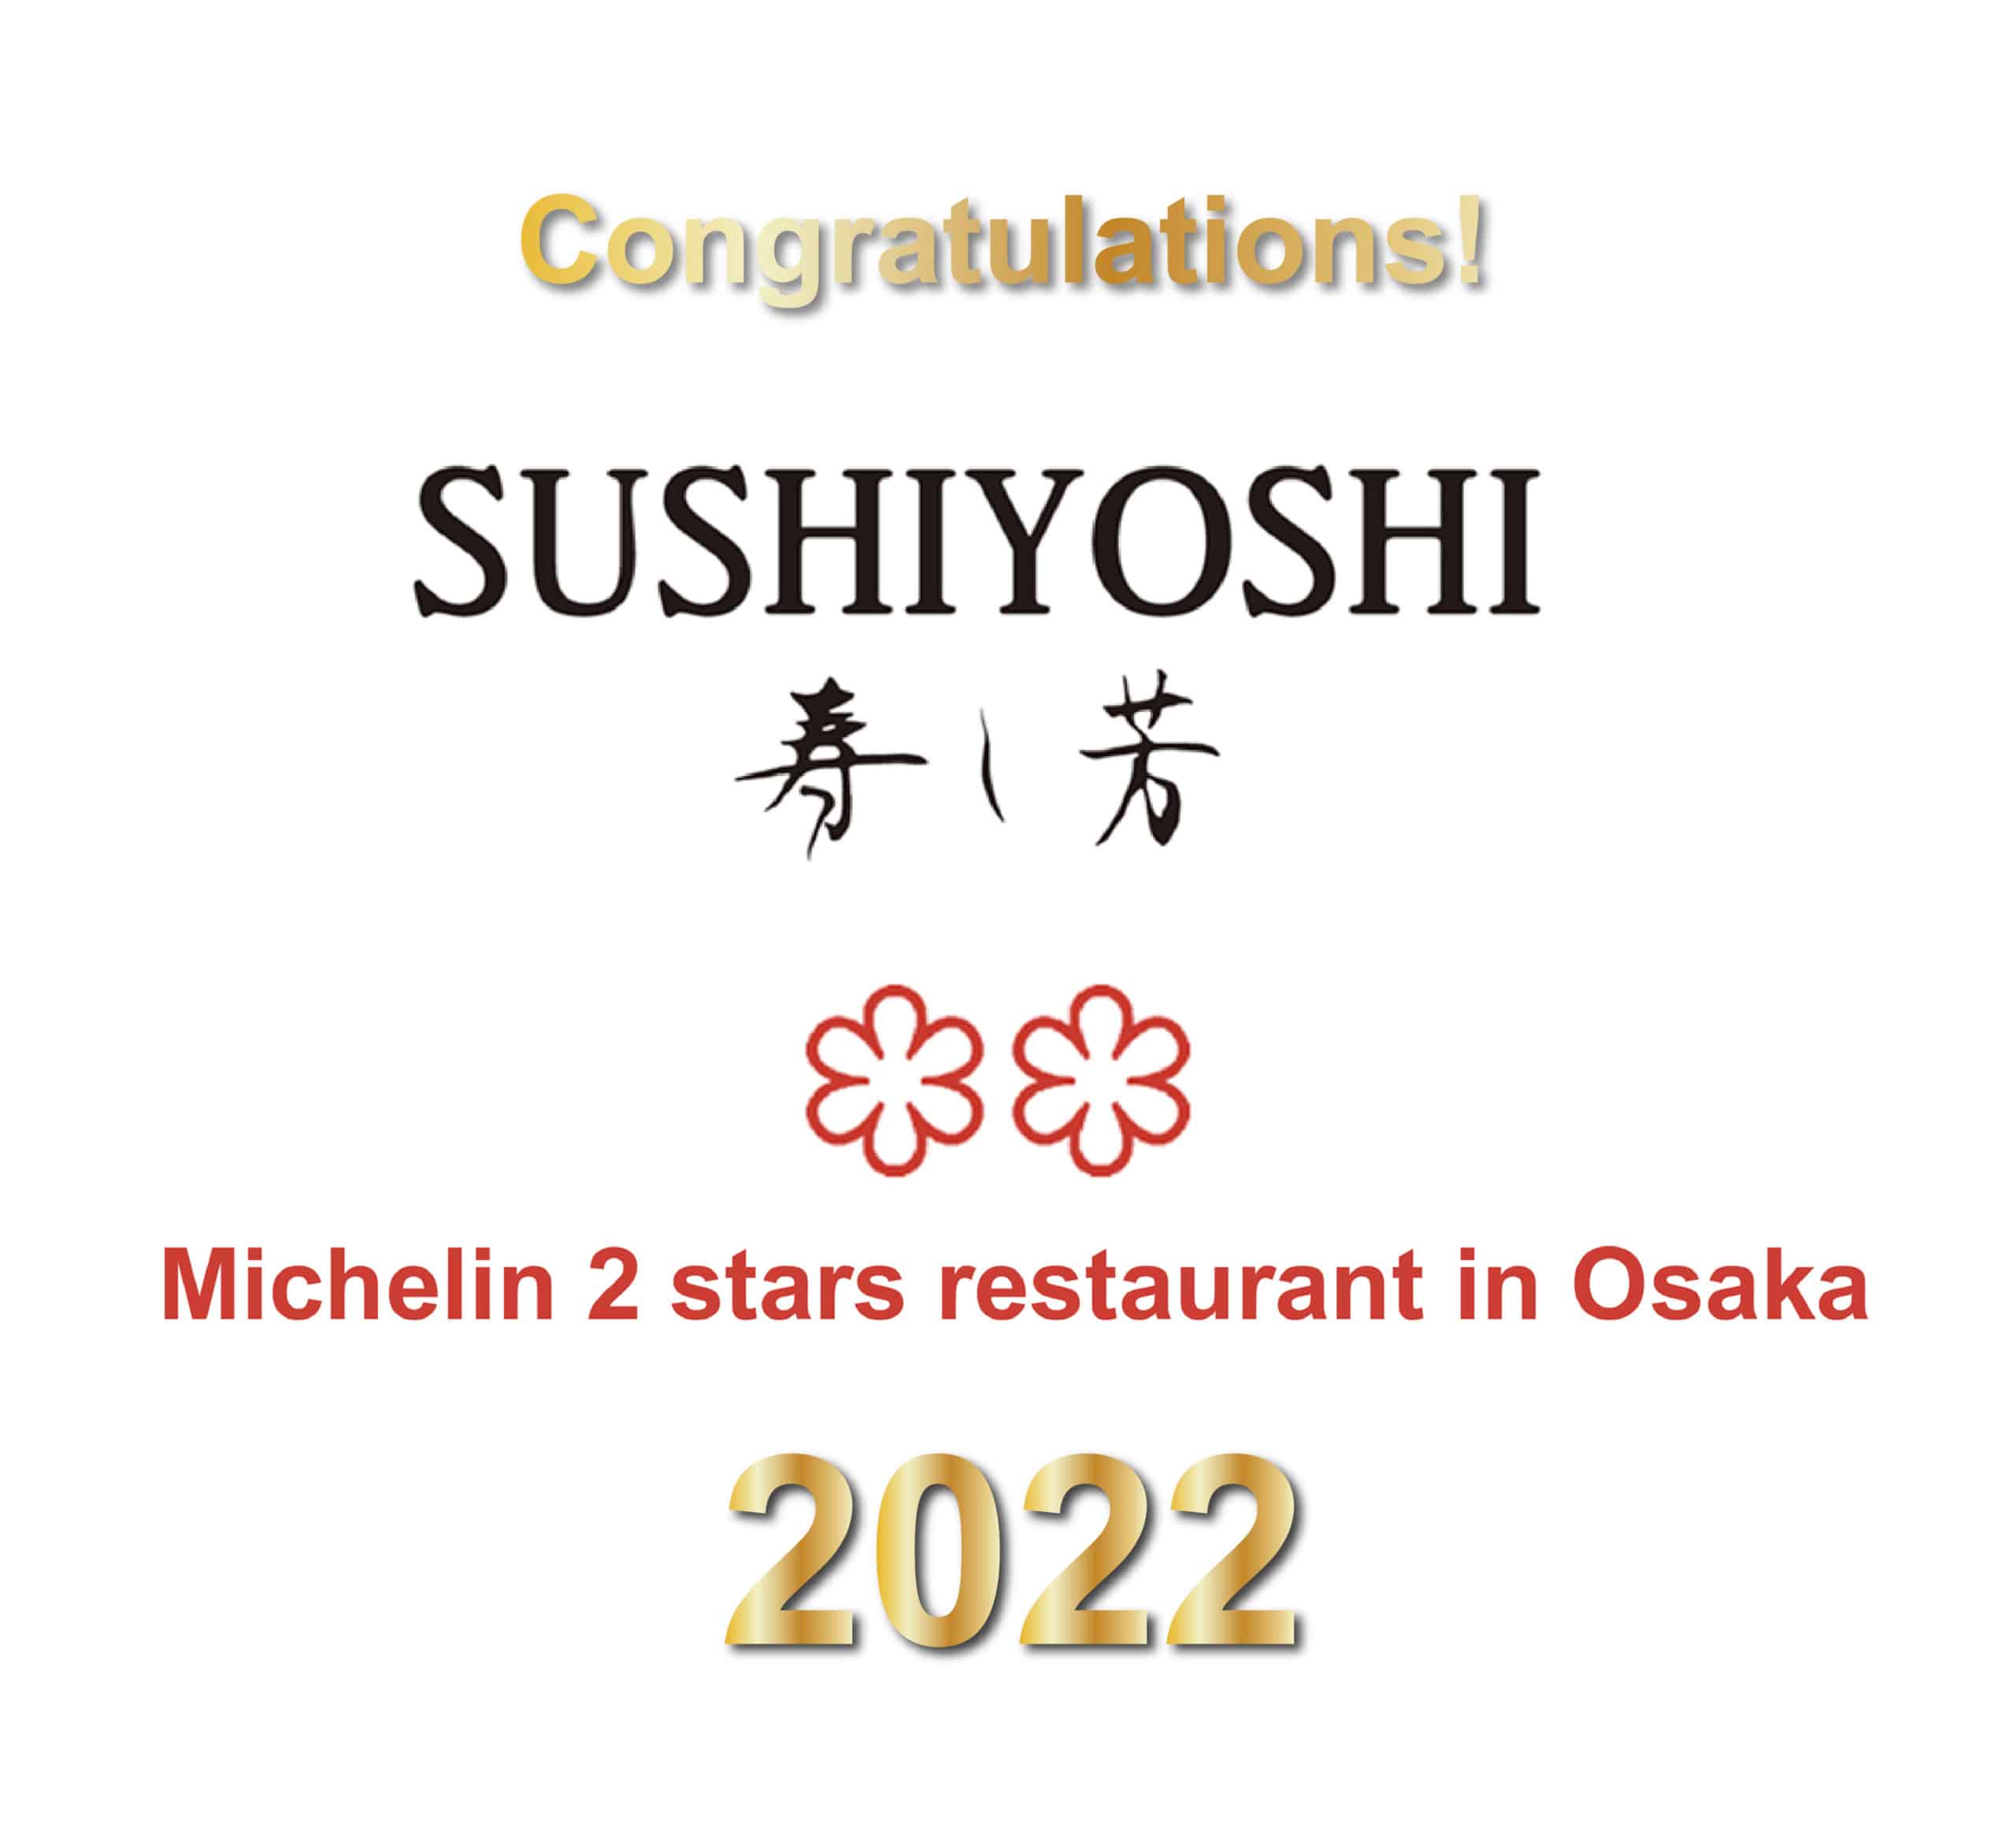 Michelin 2 stars restaurant 2022 in Osaka Sushiyoshi